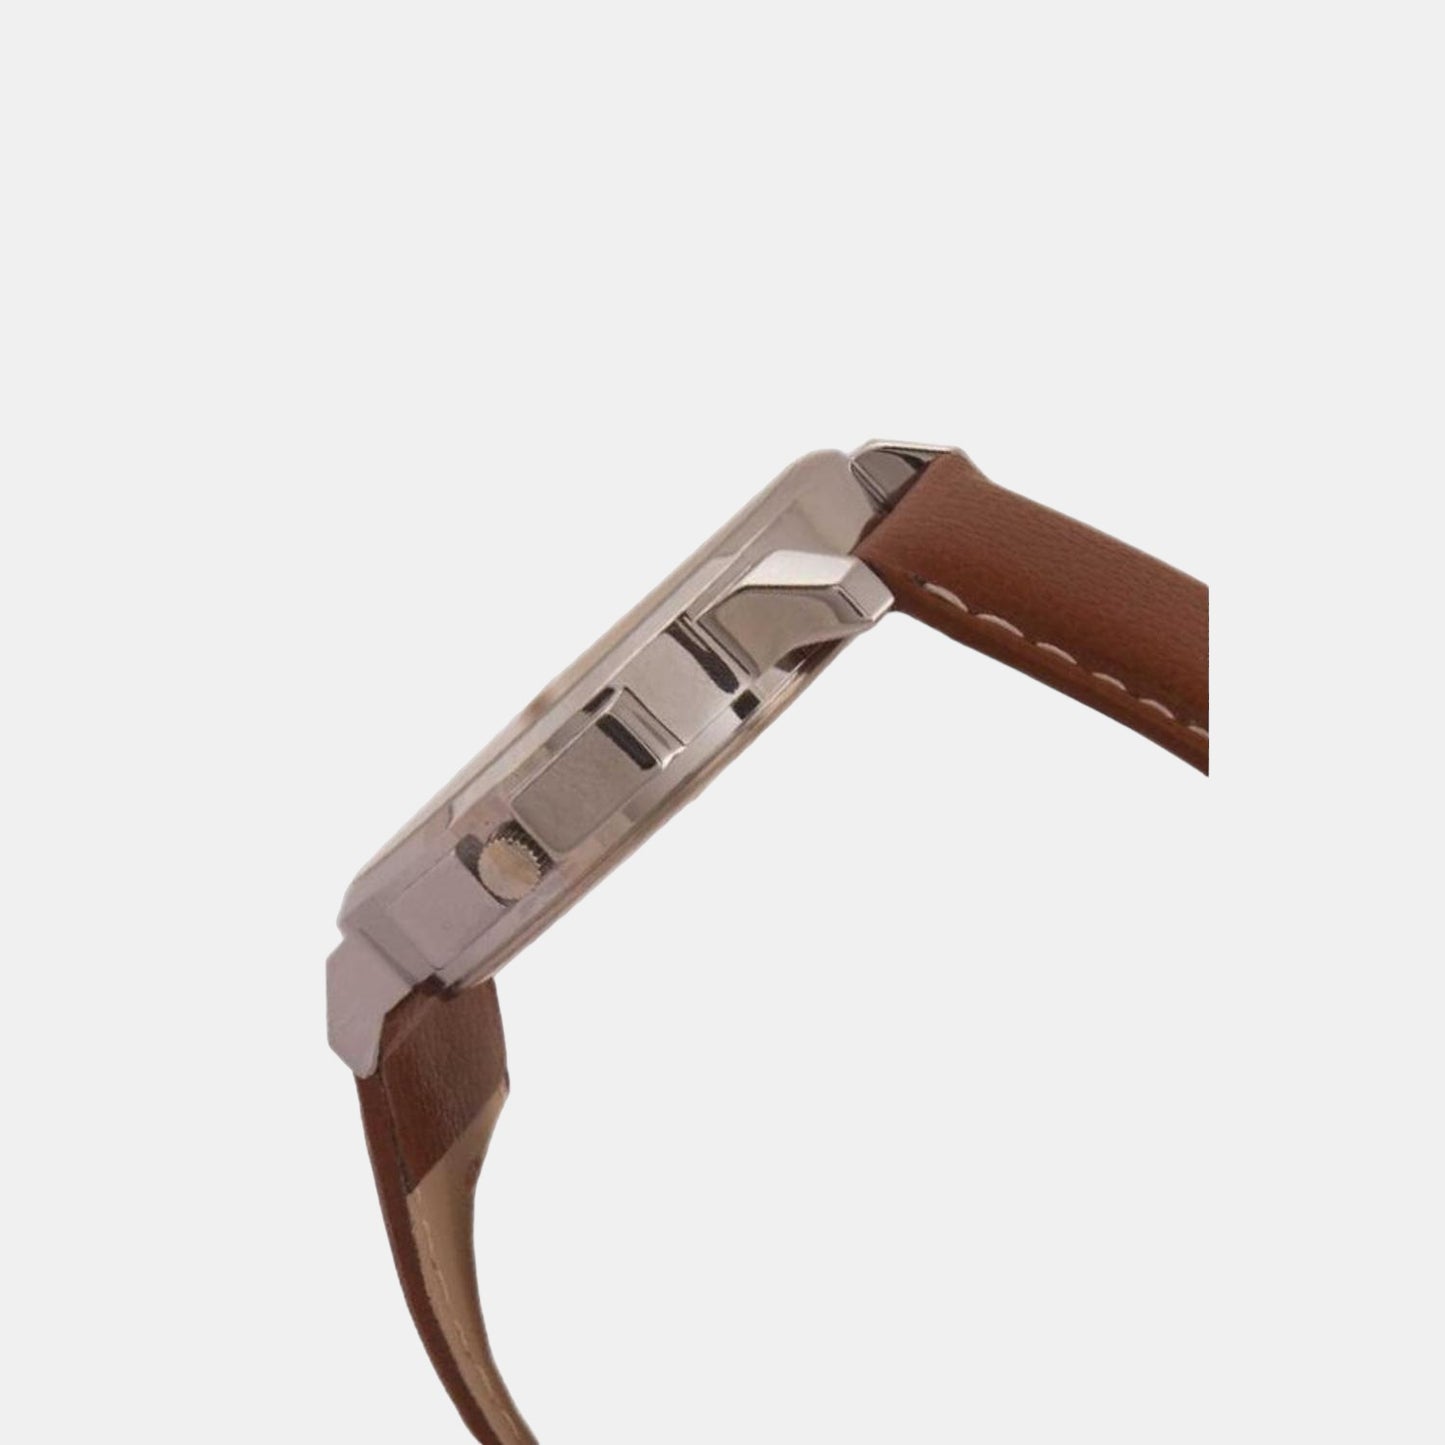 Male Grey Analog Leather Watch TW027HG07